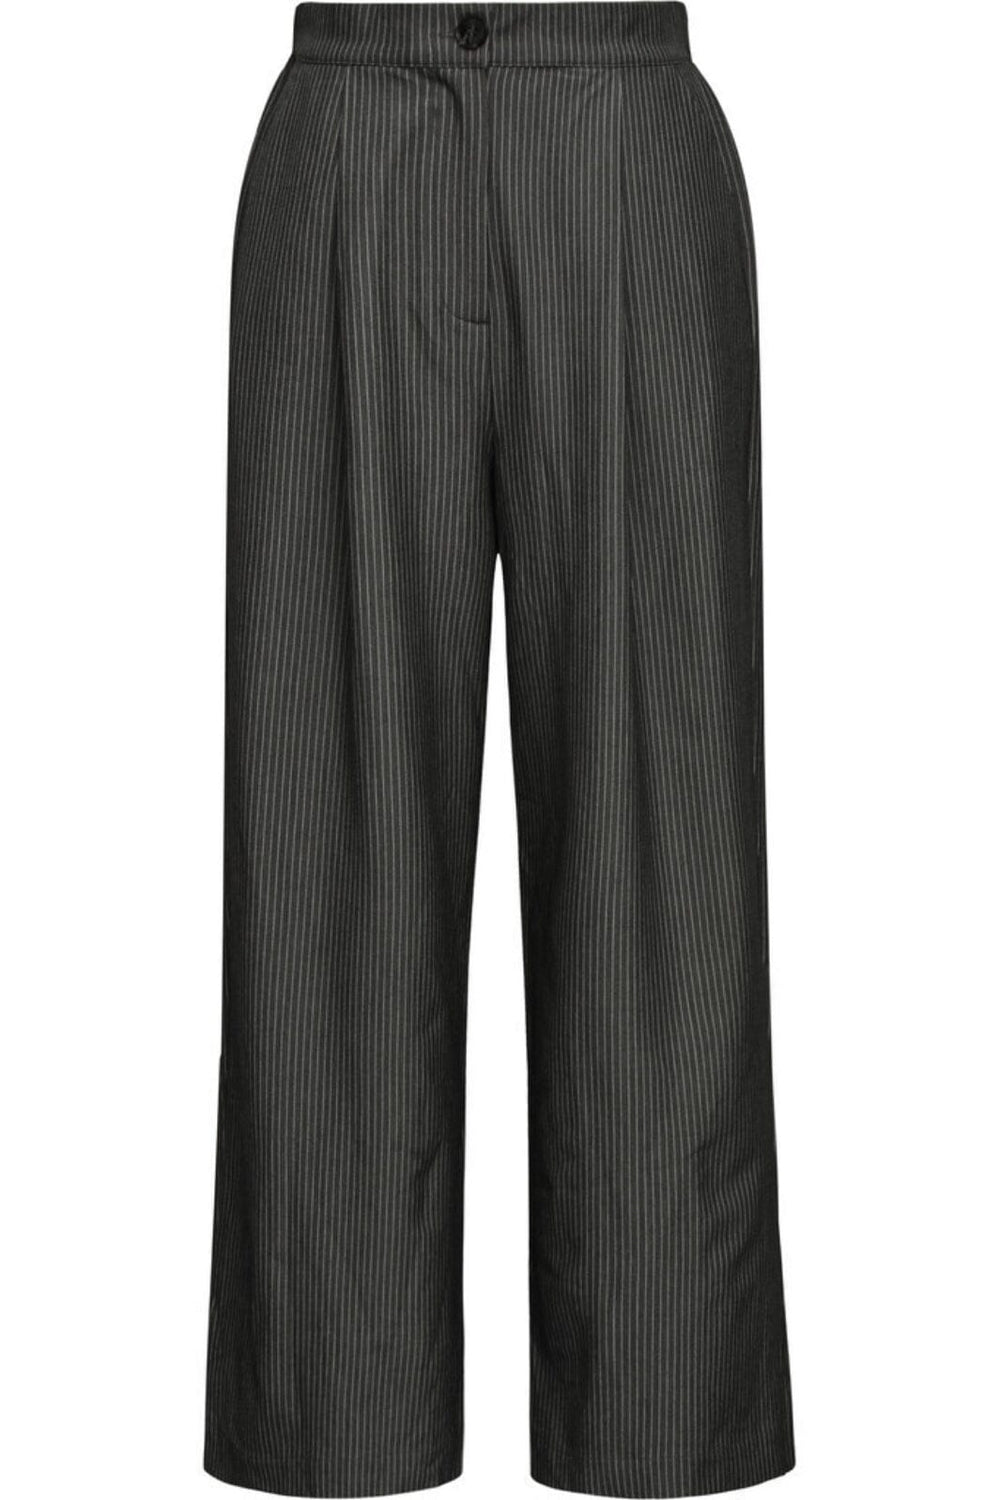 A-View - Madison Pants - 283 Dark Grey Bukser 